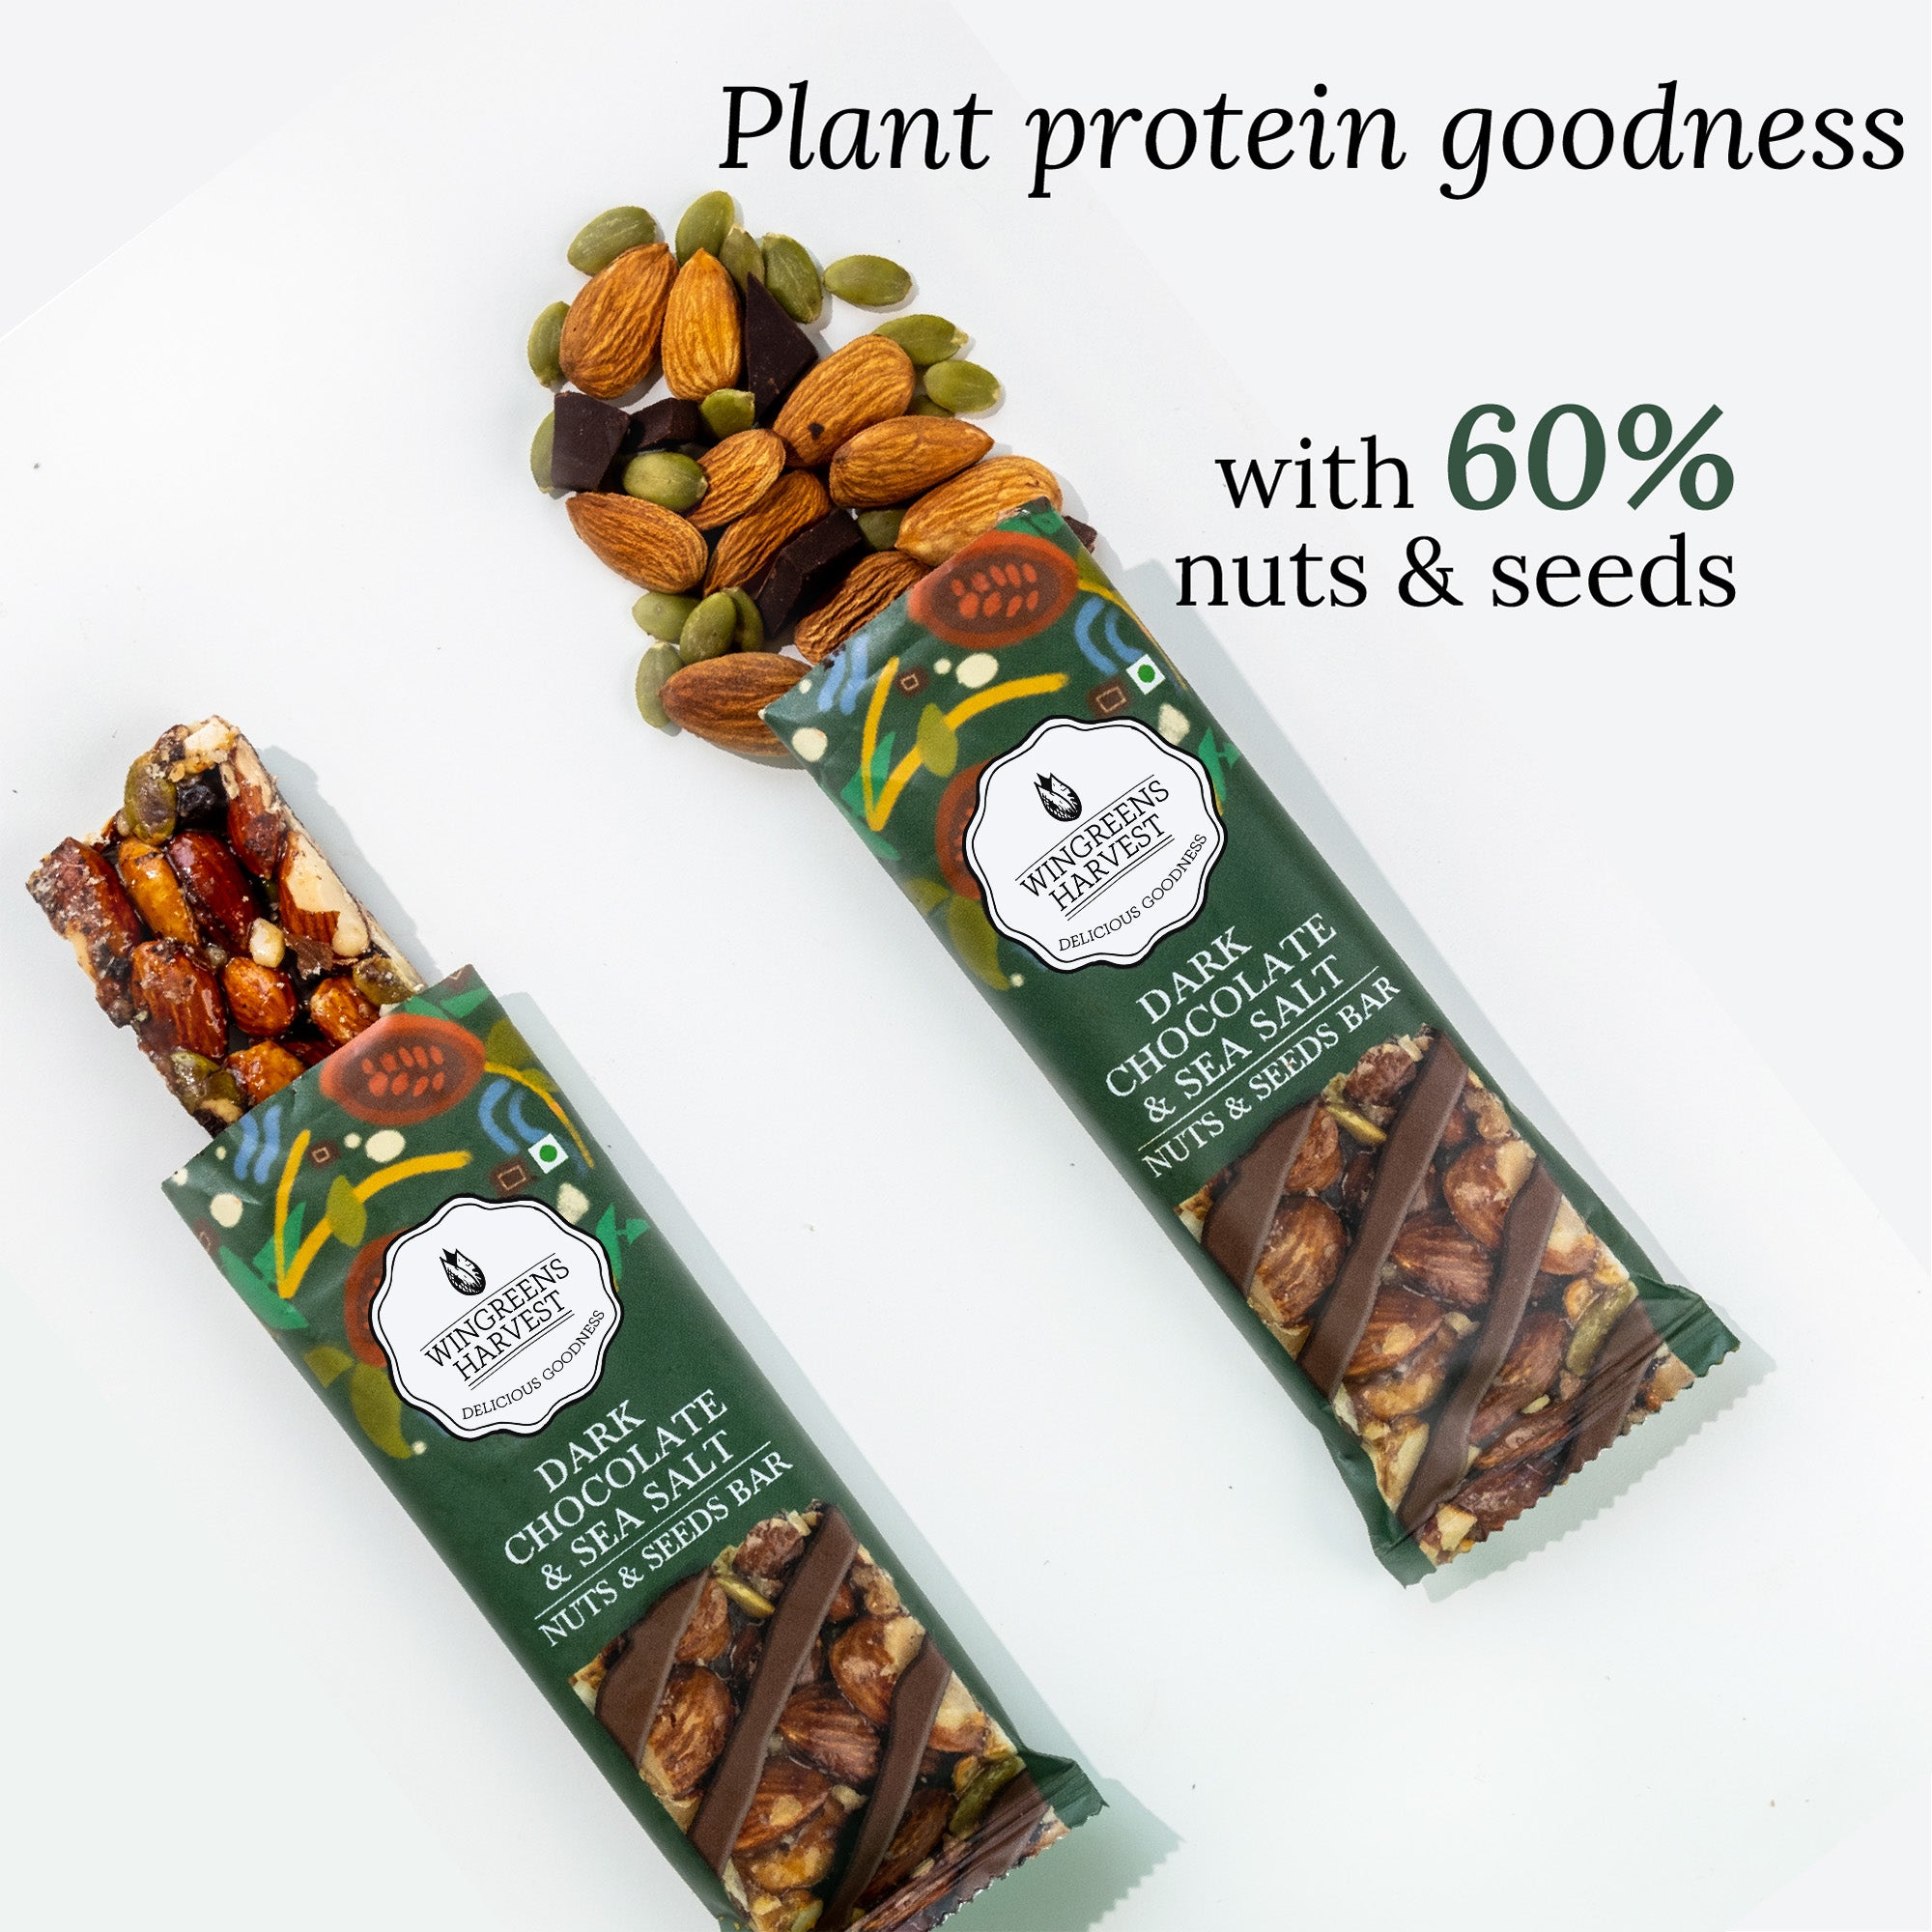 Nuts & Seeds Bars - Dark Chocolate and Sea Salt 180 g (30 g x 6 Bars)